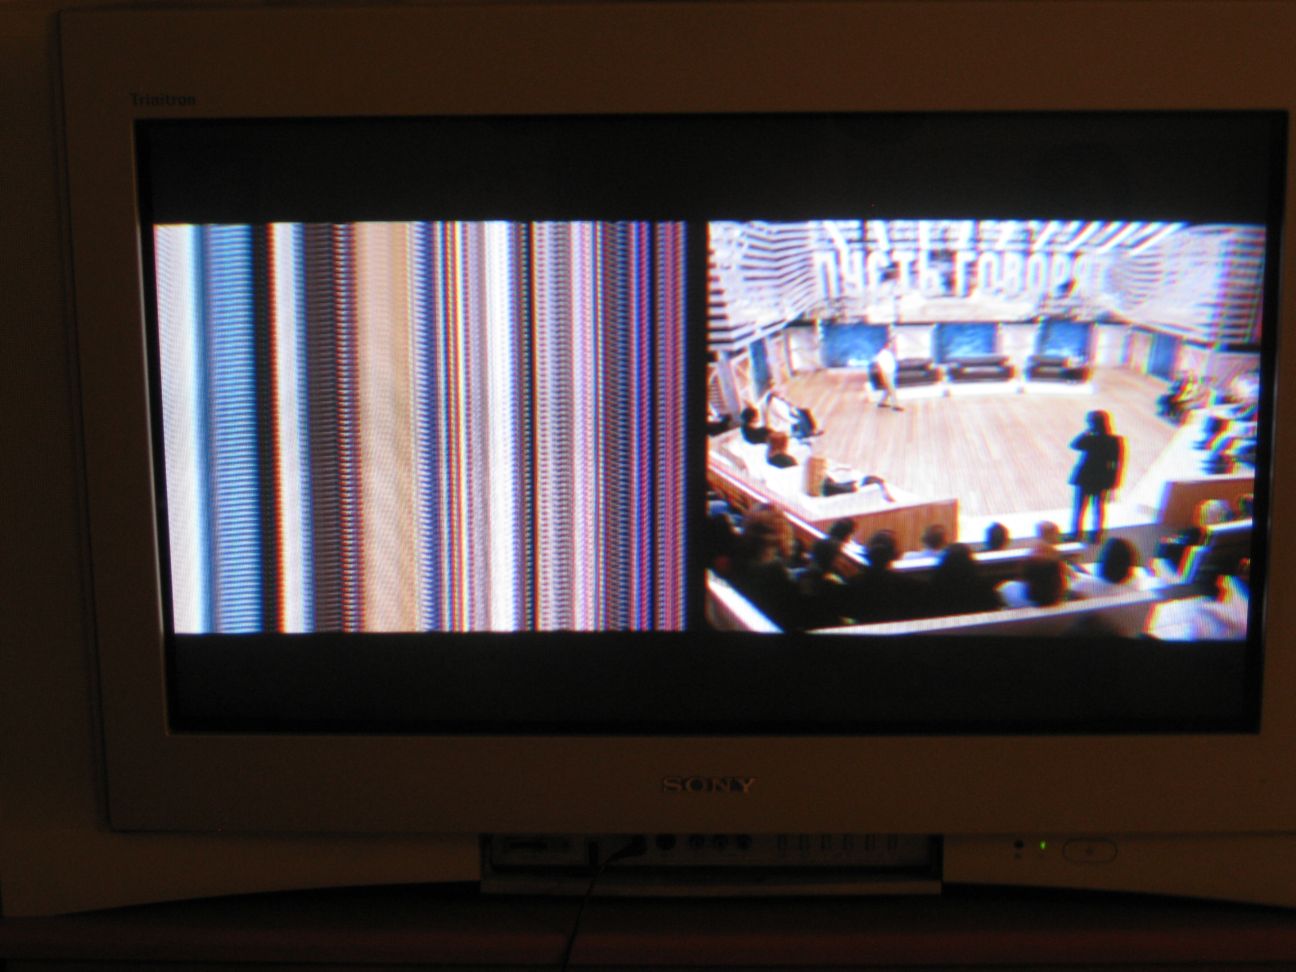 Зависает изображение телевизоре. Поломка телевизора. Дефект экрана кинескопного телевизора. Экран поломки телевизора. Телевизор черный экран.